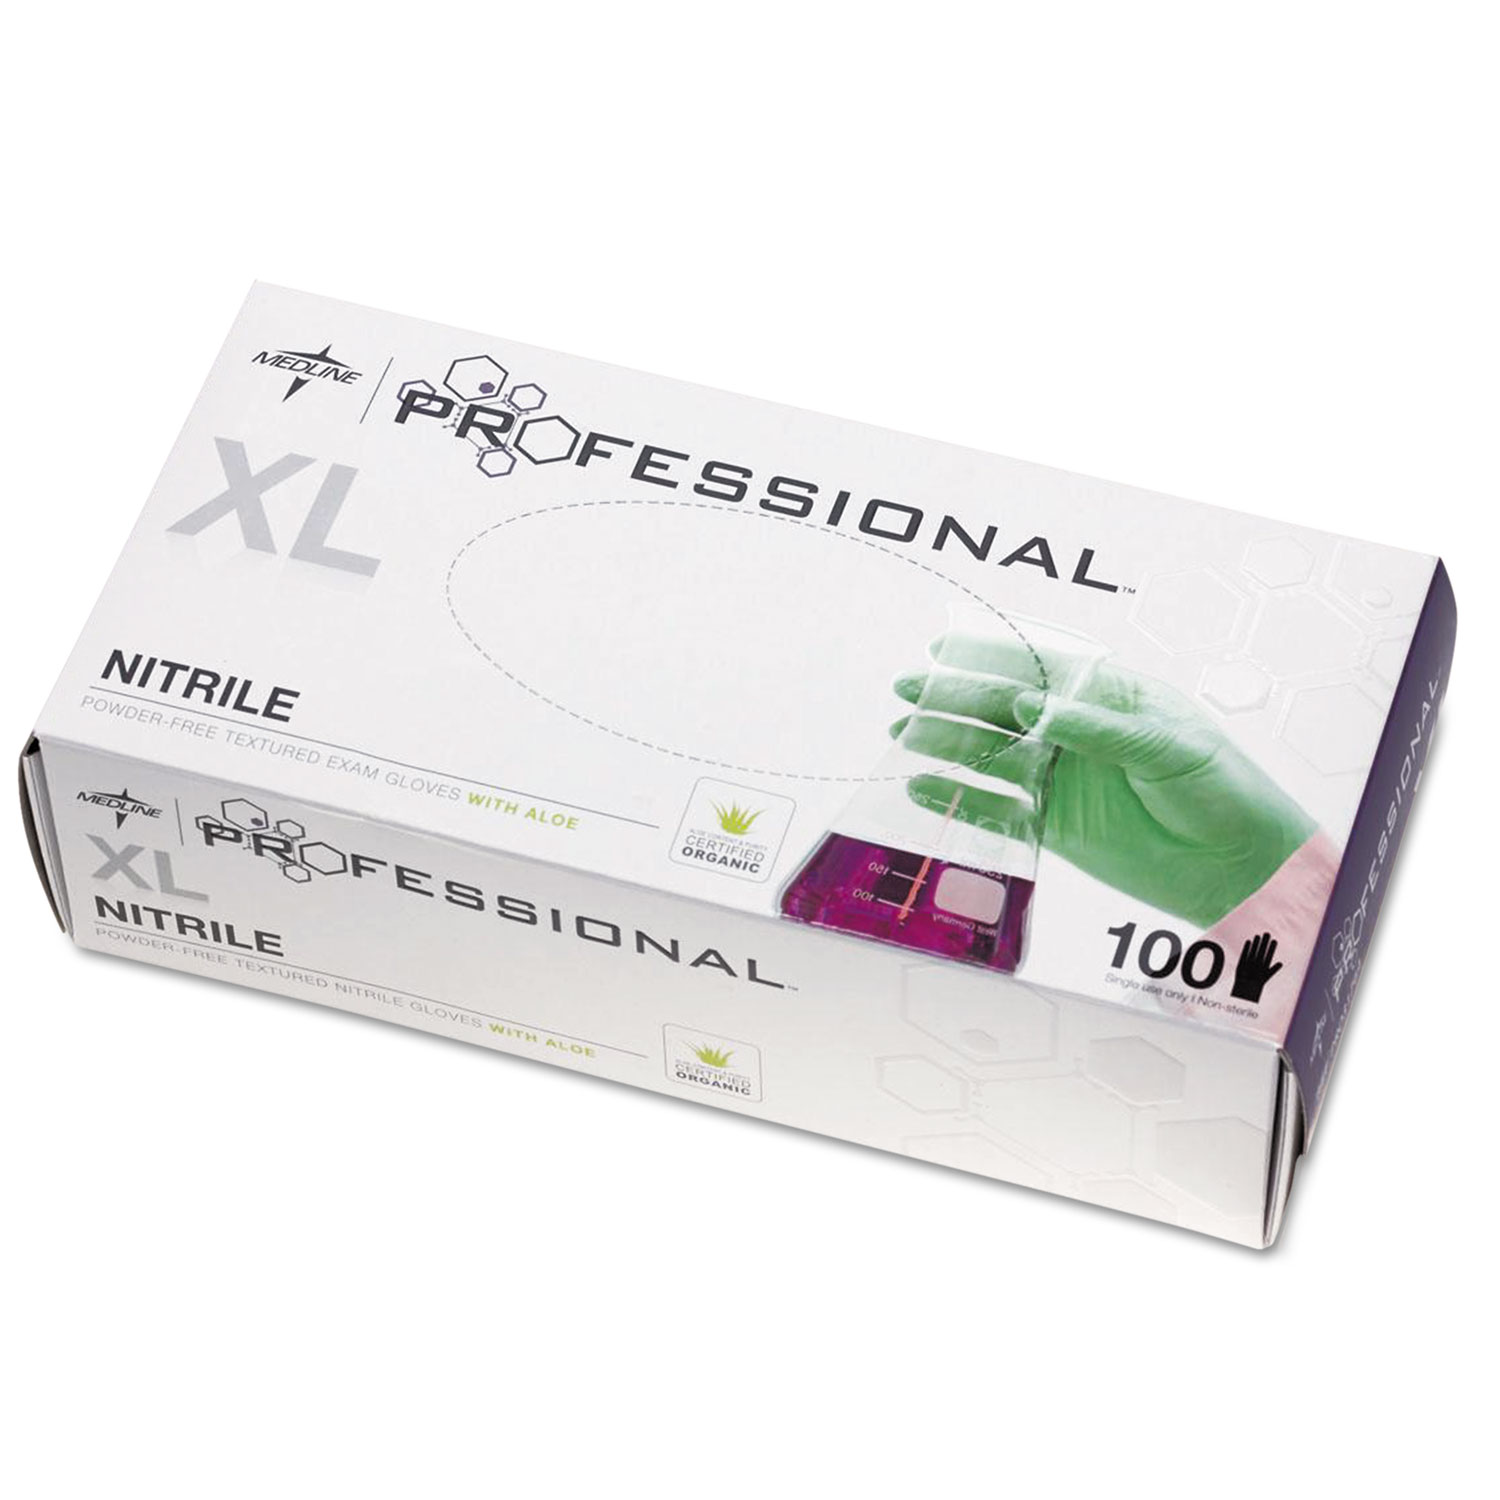  Medline PRO31764 Professional Nitrile Exam Gloves with Aloe, X-Large, Green, 100/Box (MIIPRO31764) 